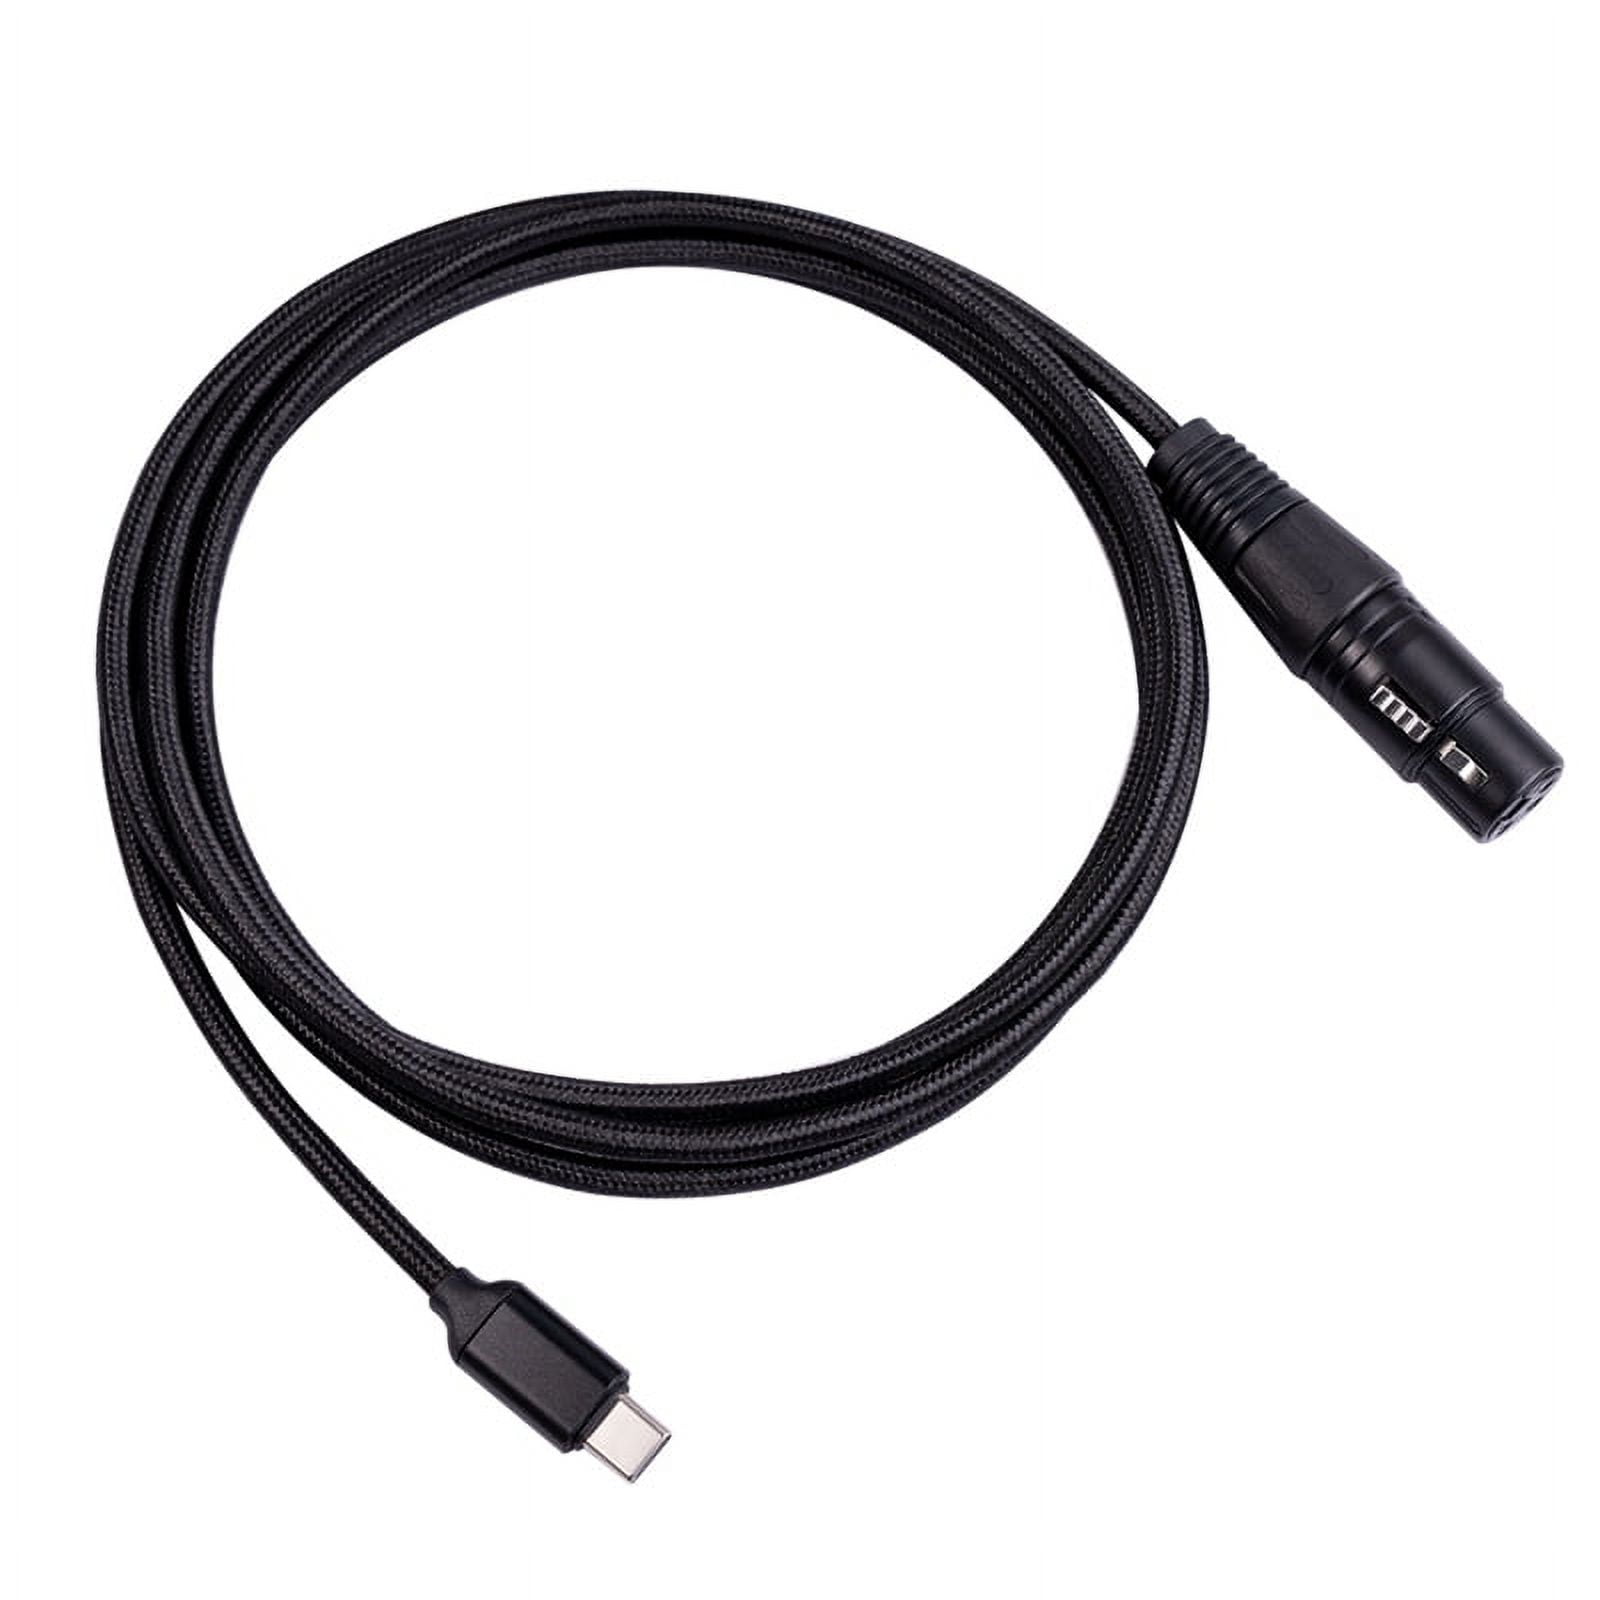 Saramonic Câble USB-C Vers XLR UTC-XLR 6 m Noir